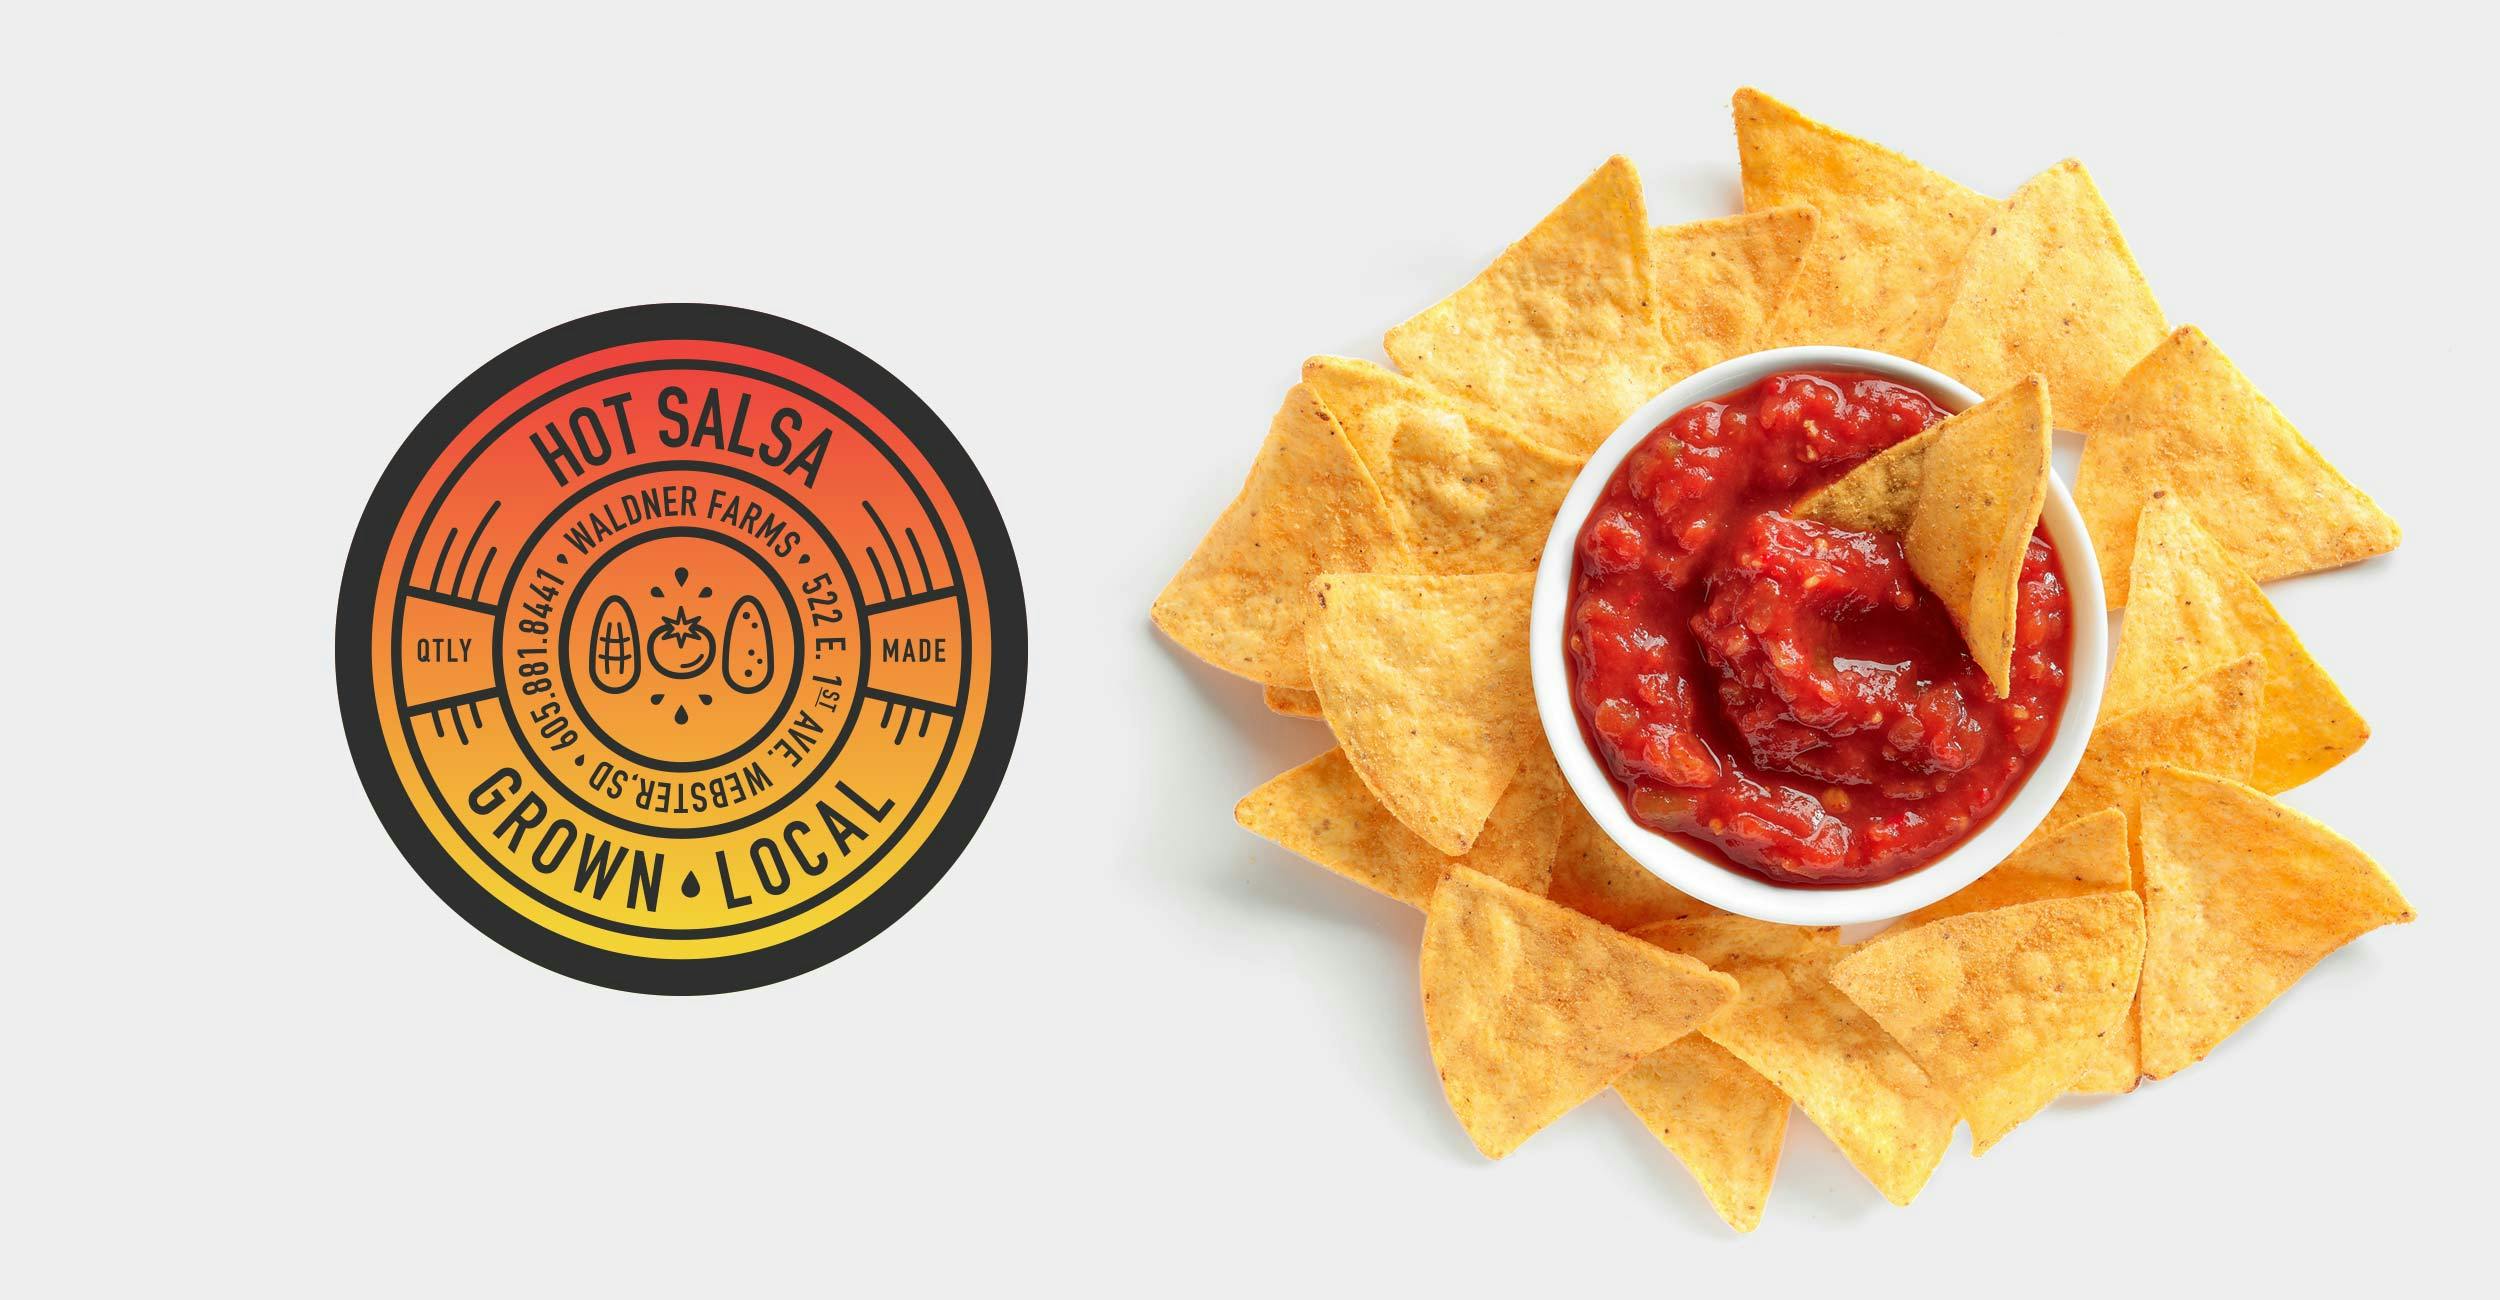 Waldner farms salsa label chips